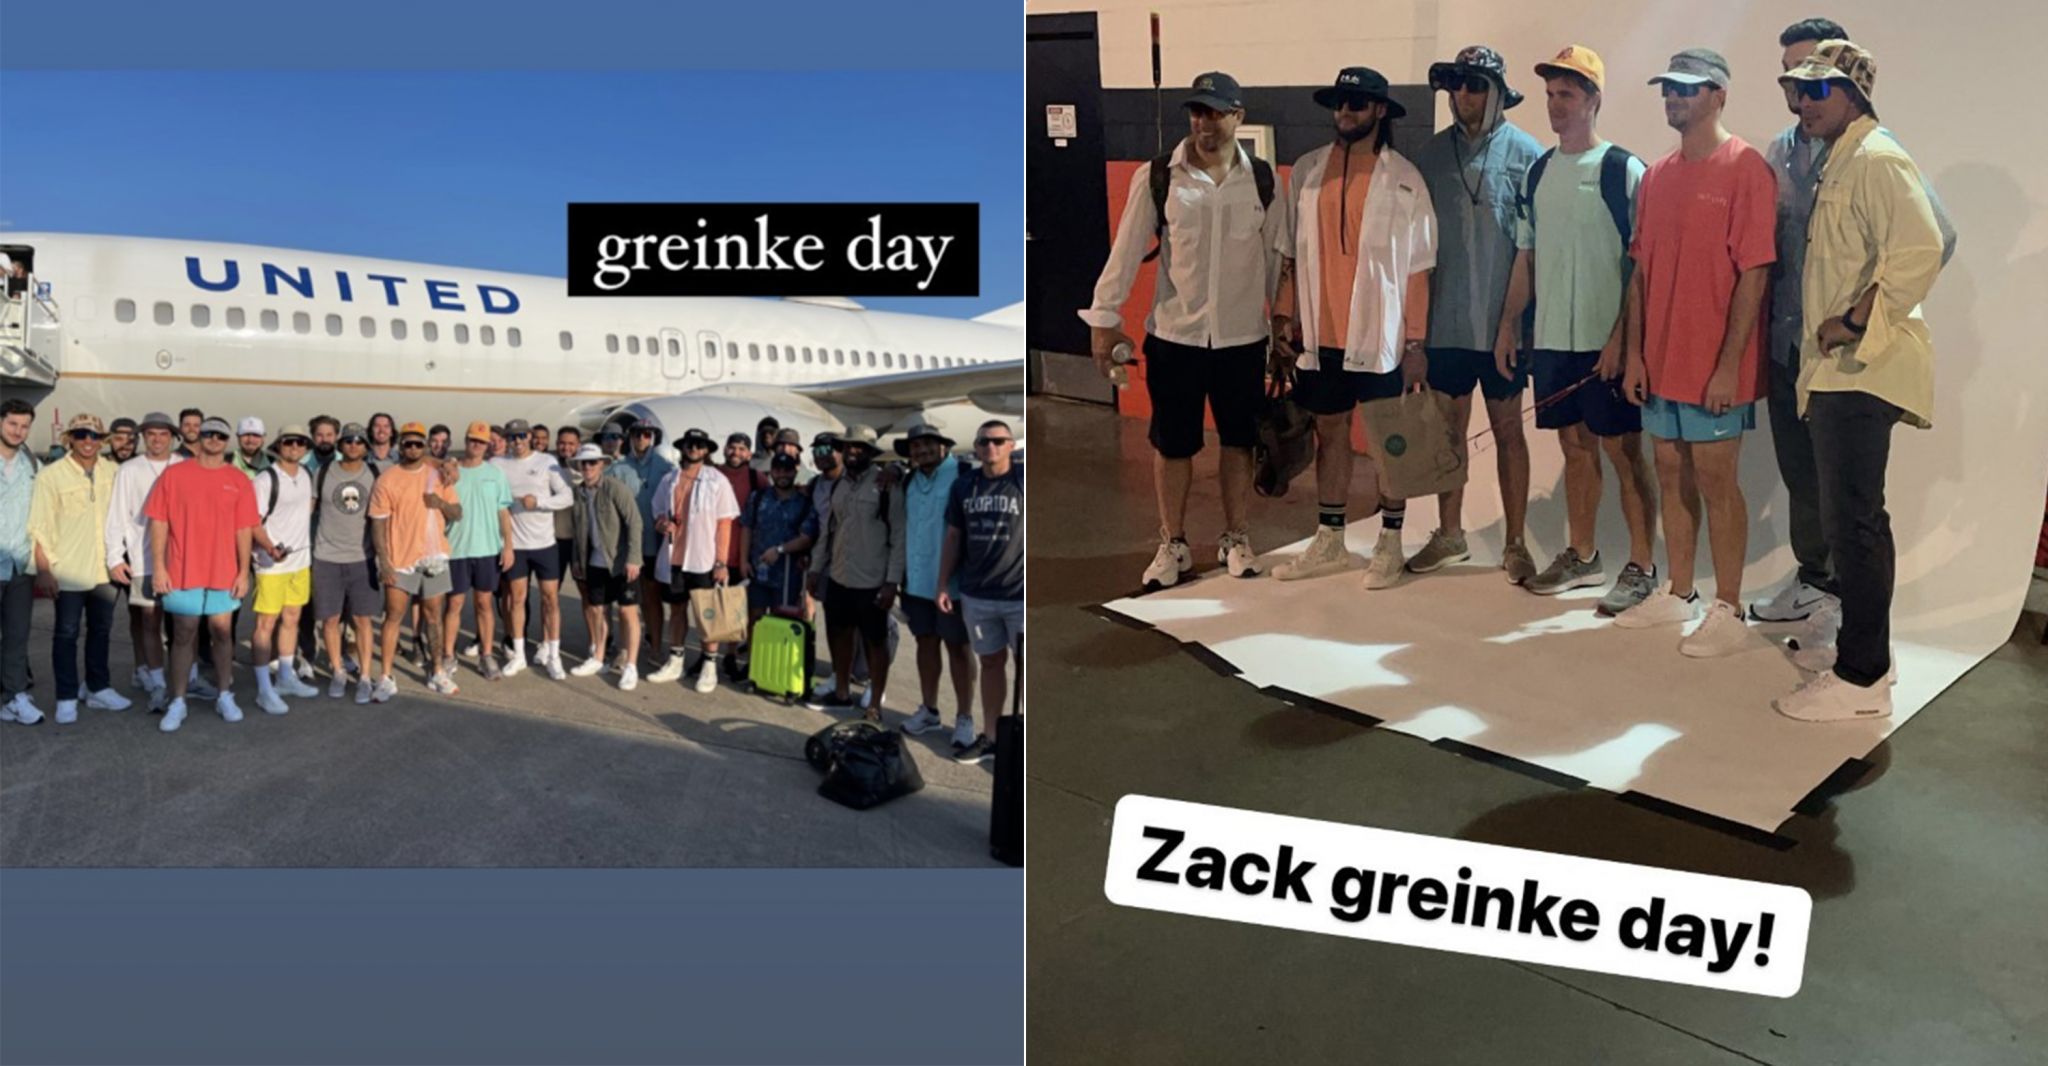 Astros travel dressed as Zack Greinke in fishing shirts, short